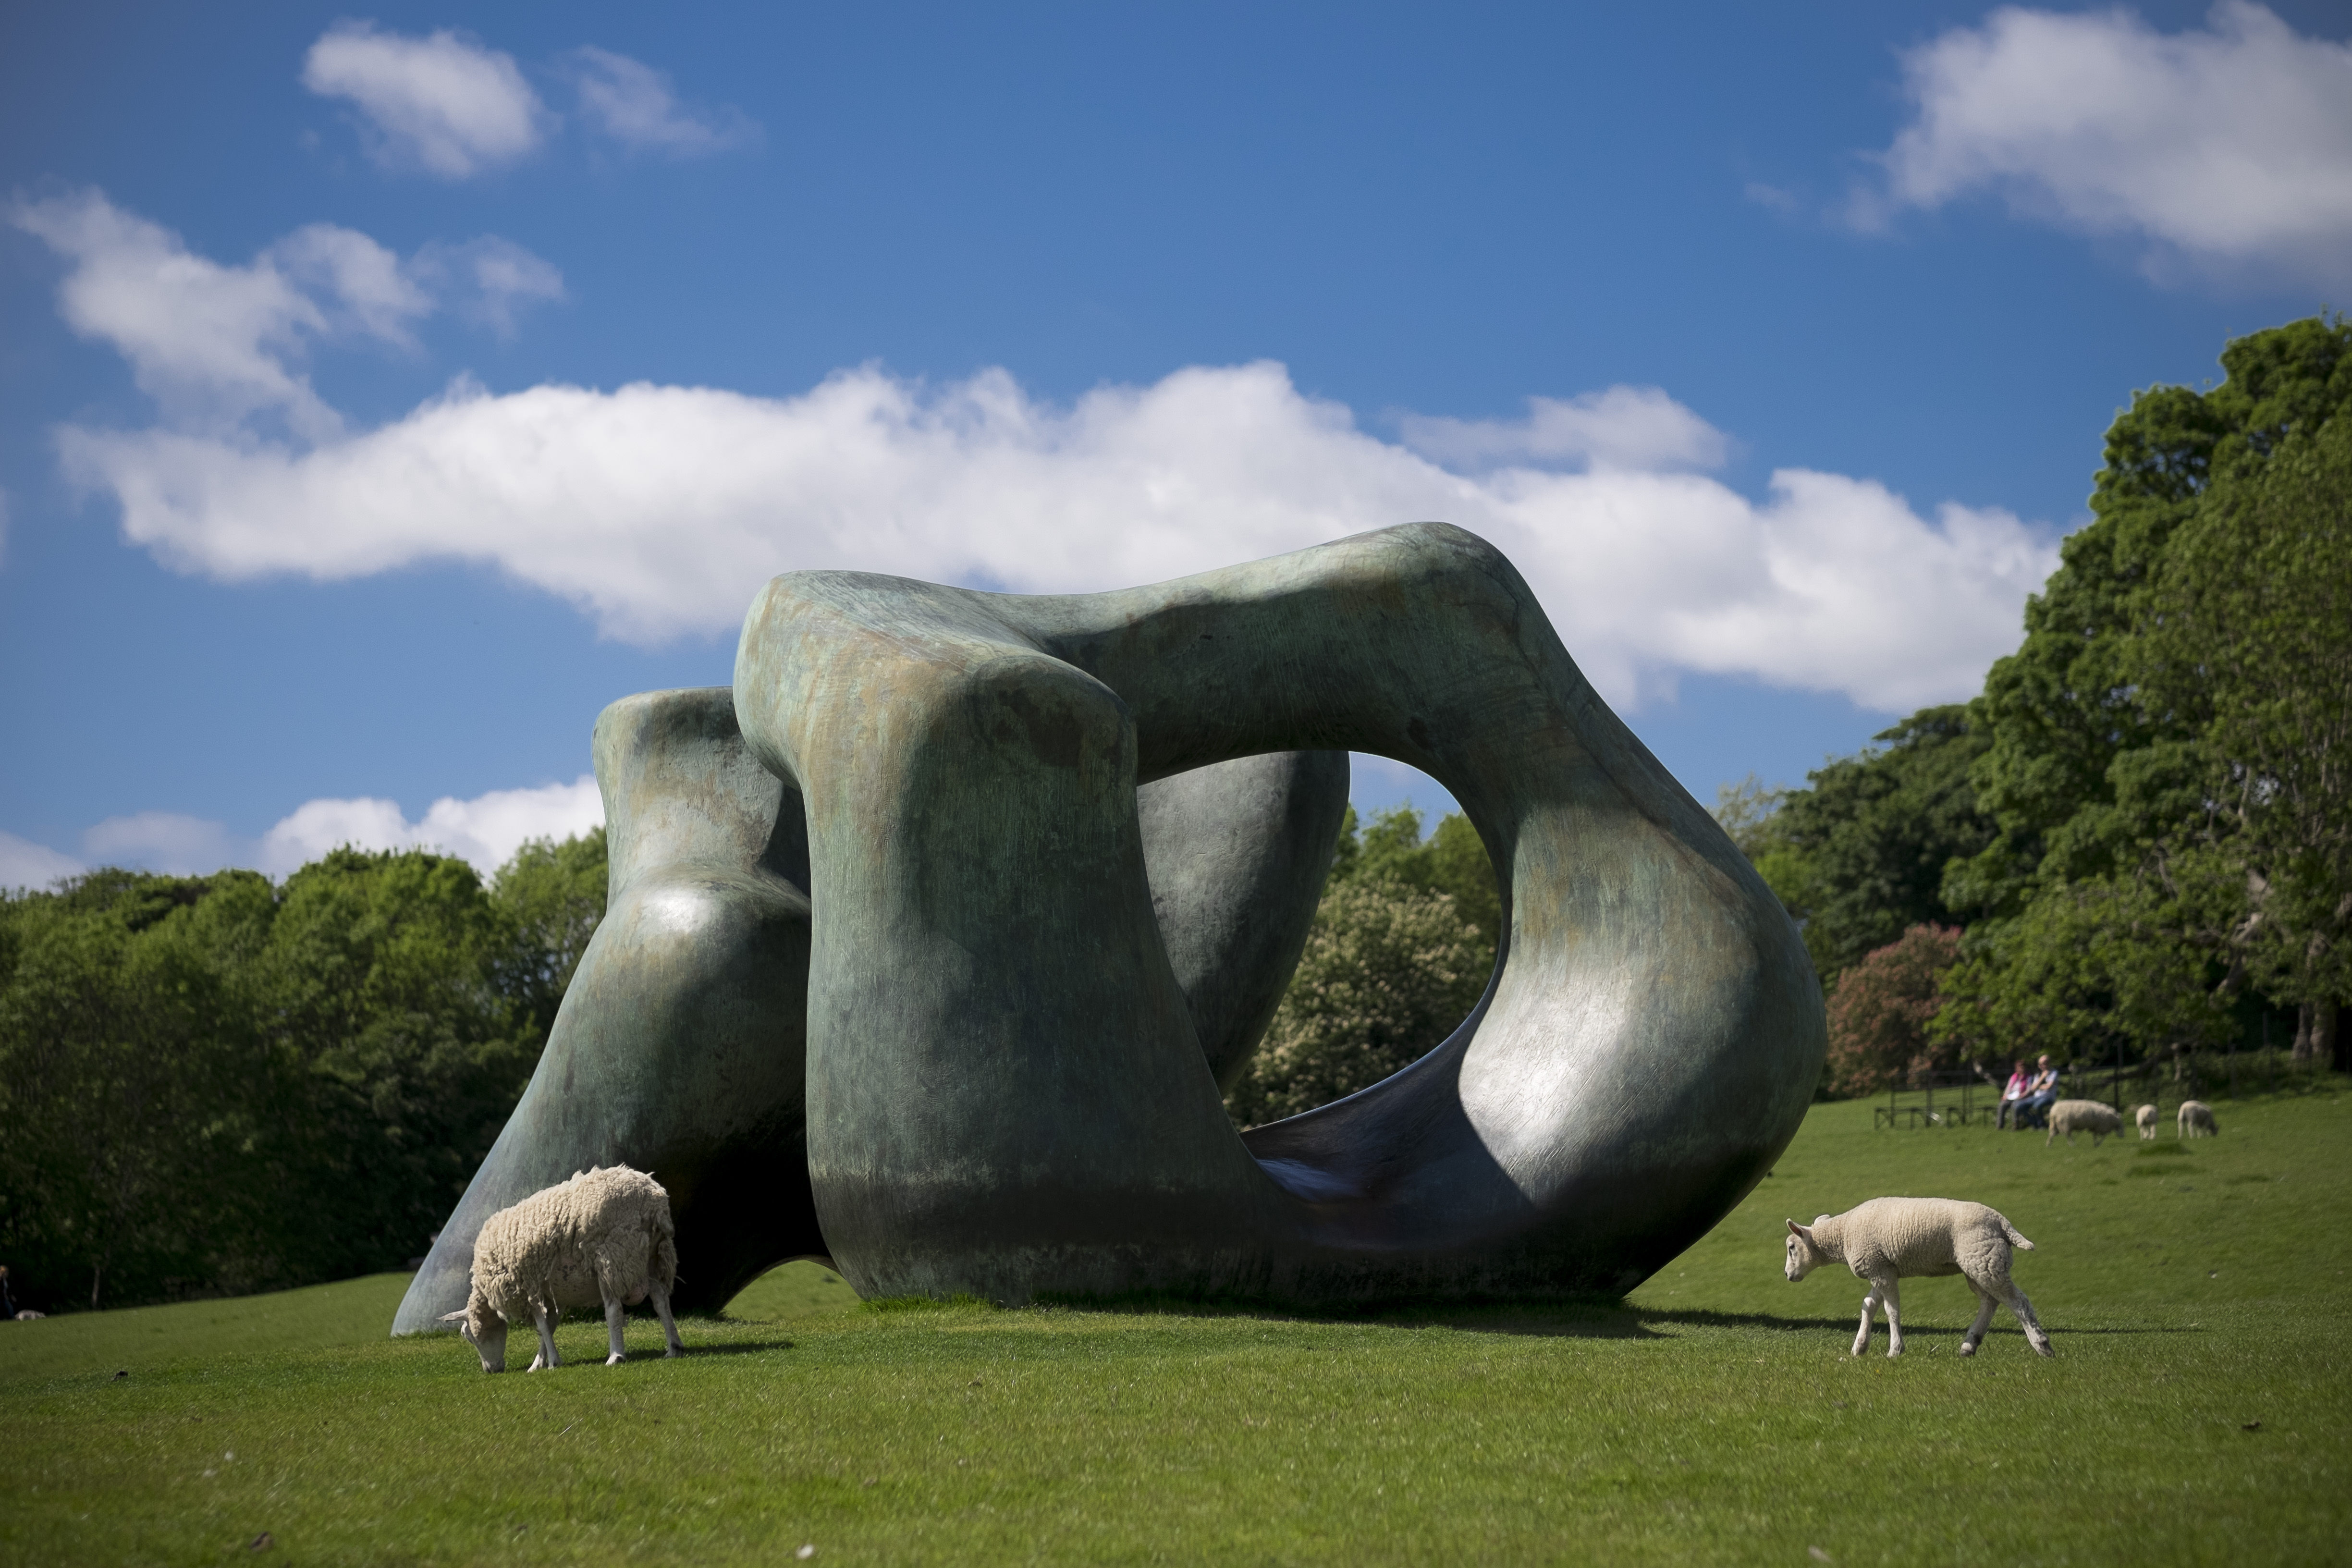 Two interlinked bronze sculptures displayed outdoor, with sheep grazing around the work.